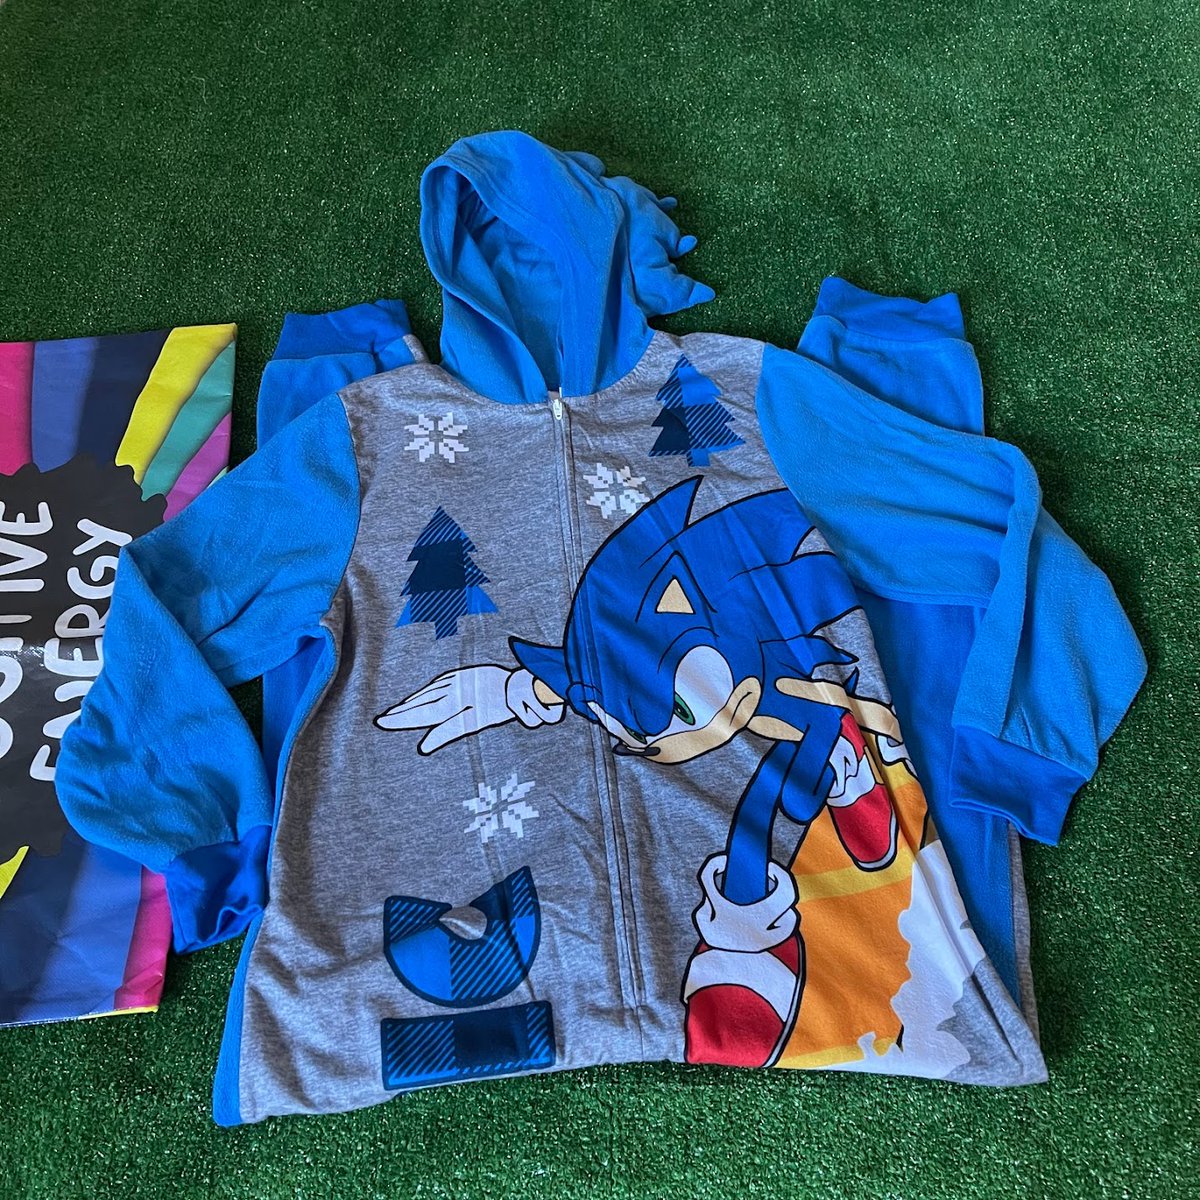 Sega Sonic The Hedgehog Hoodie Union Suit Pajamas Blanket Sleepwear Size L

#Sega
#SonicTheHedgehog
#HoodieUnionSuit
#Pajamas
#BlanketSleepwear
#SizeL
#GamingMerchandise
#SonicFan
#ComfyPajamas
#SleepwearFashion
ebay.com/itm/1263415174…